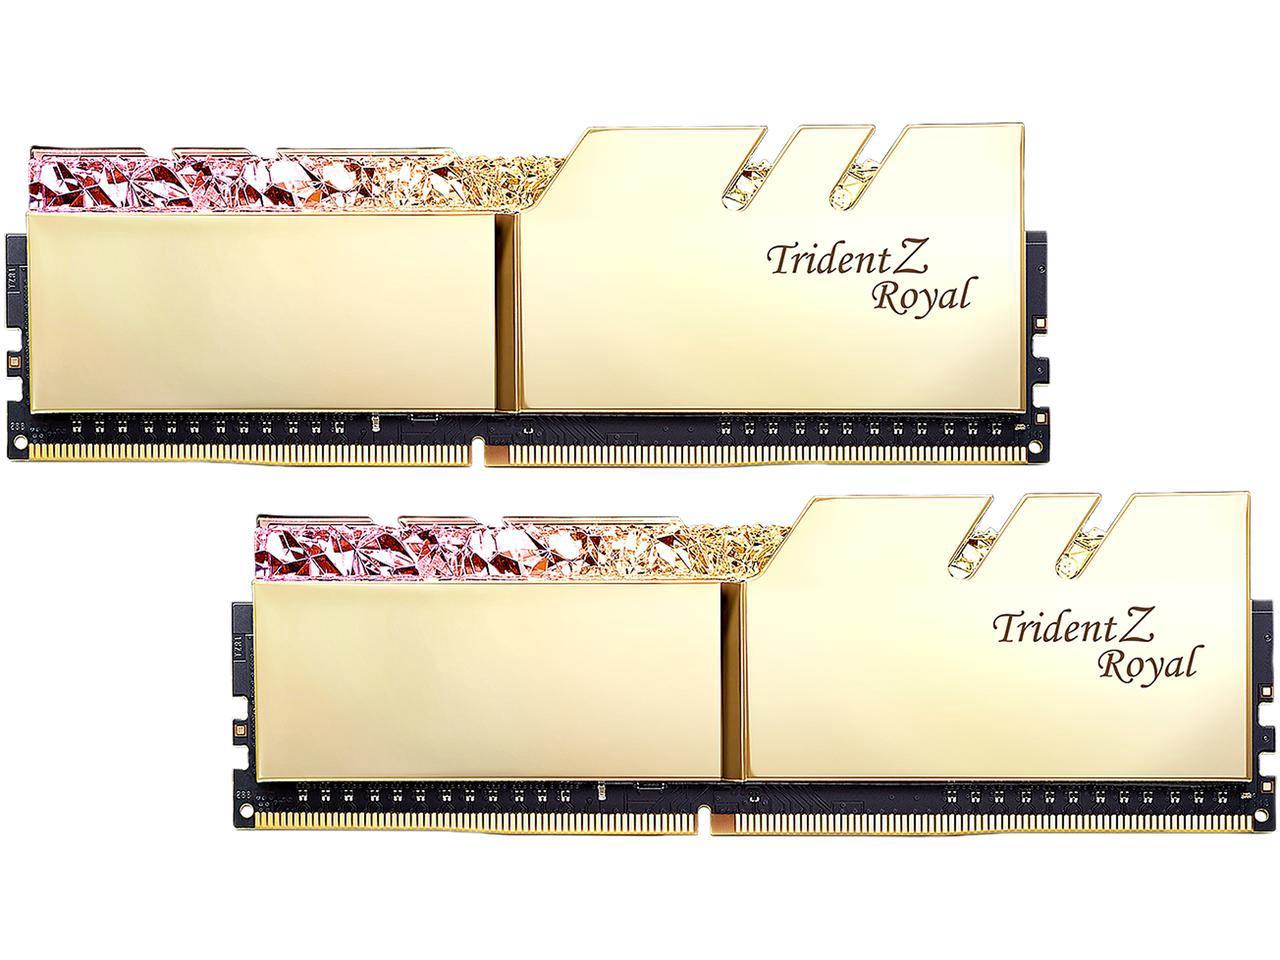 G Skill Trident Z Royal Series DDR4 16GB (2 x 8GB) 3200MHz -G (F4-3200C16D-16GTRG)